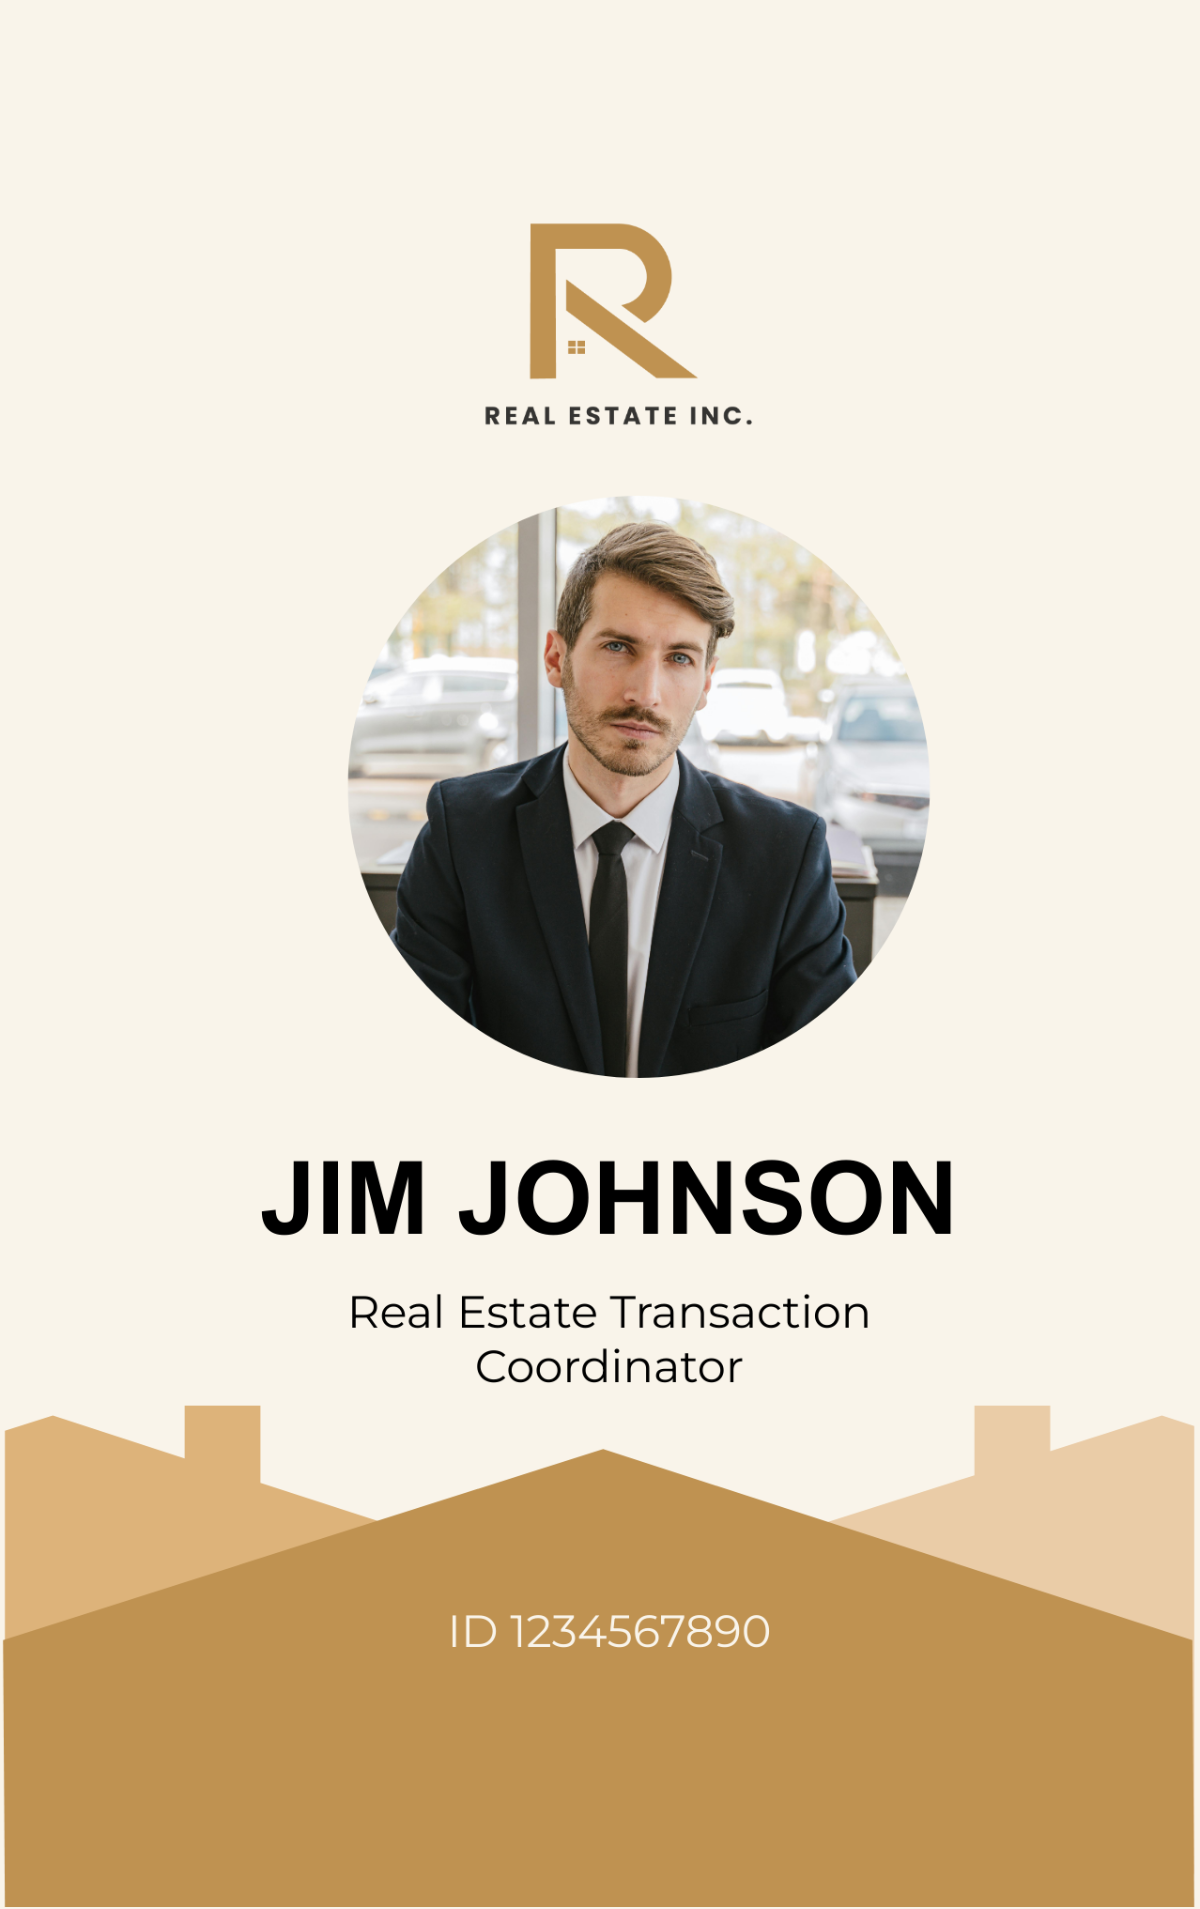 Real Estate Transaction Coordinator ID Card Template